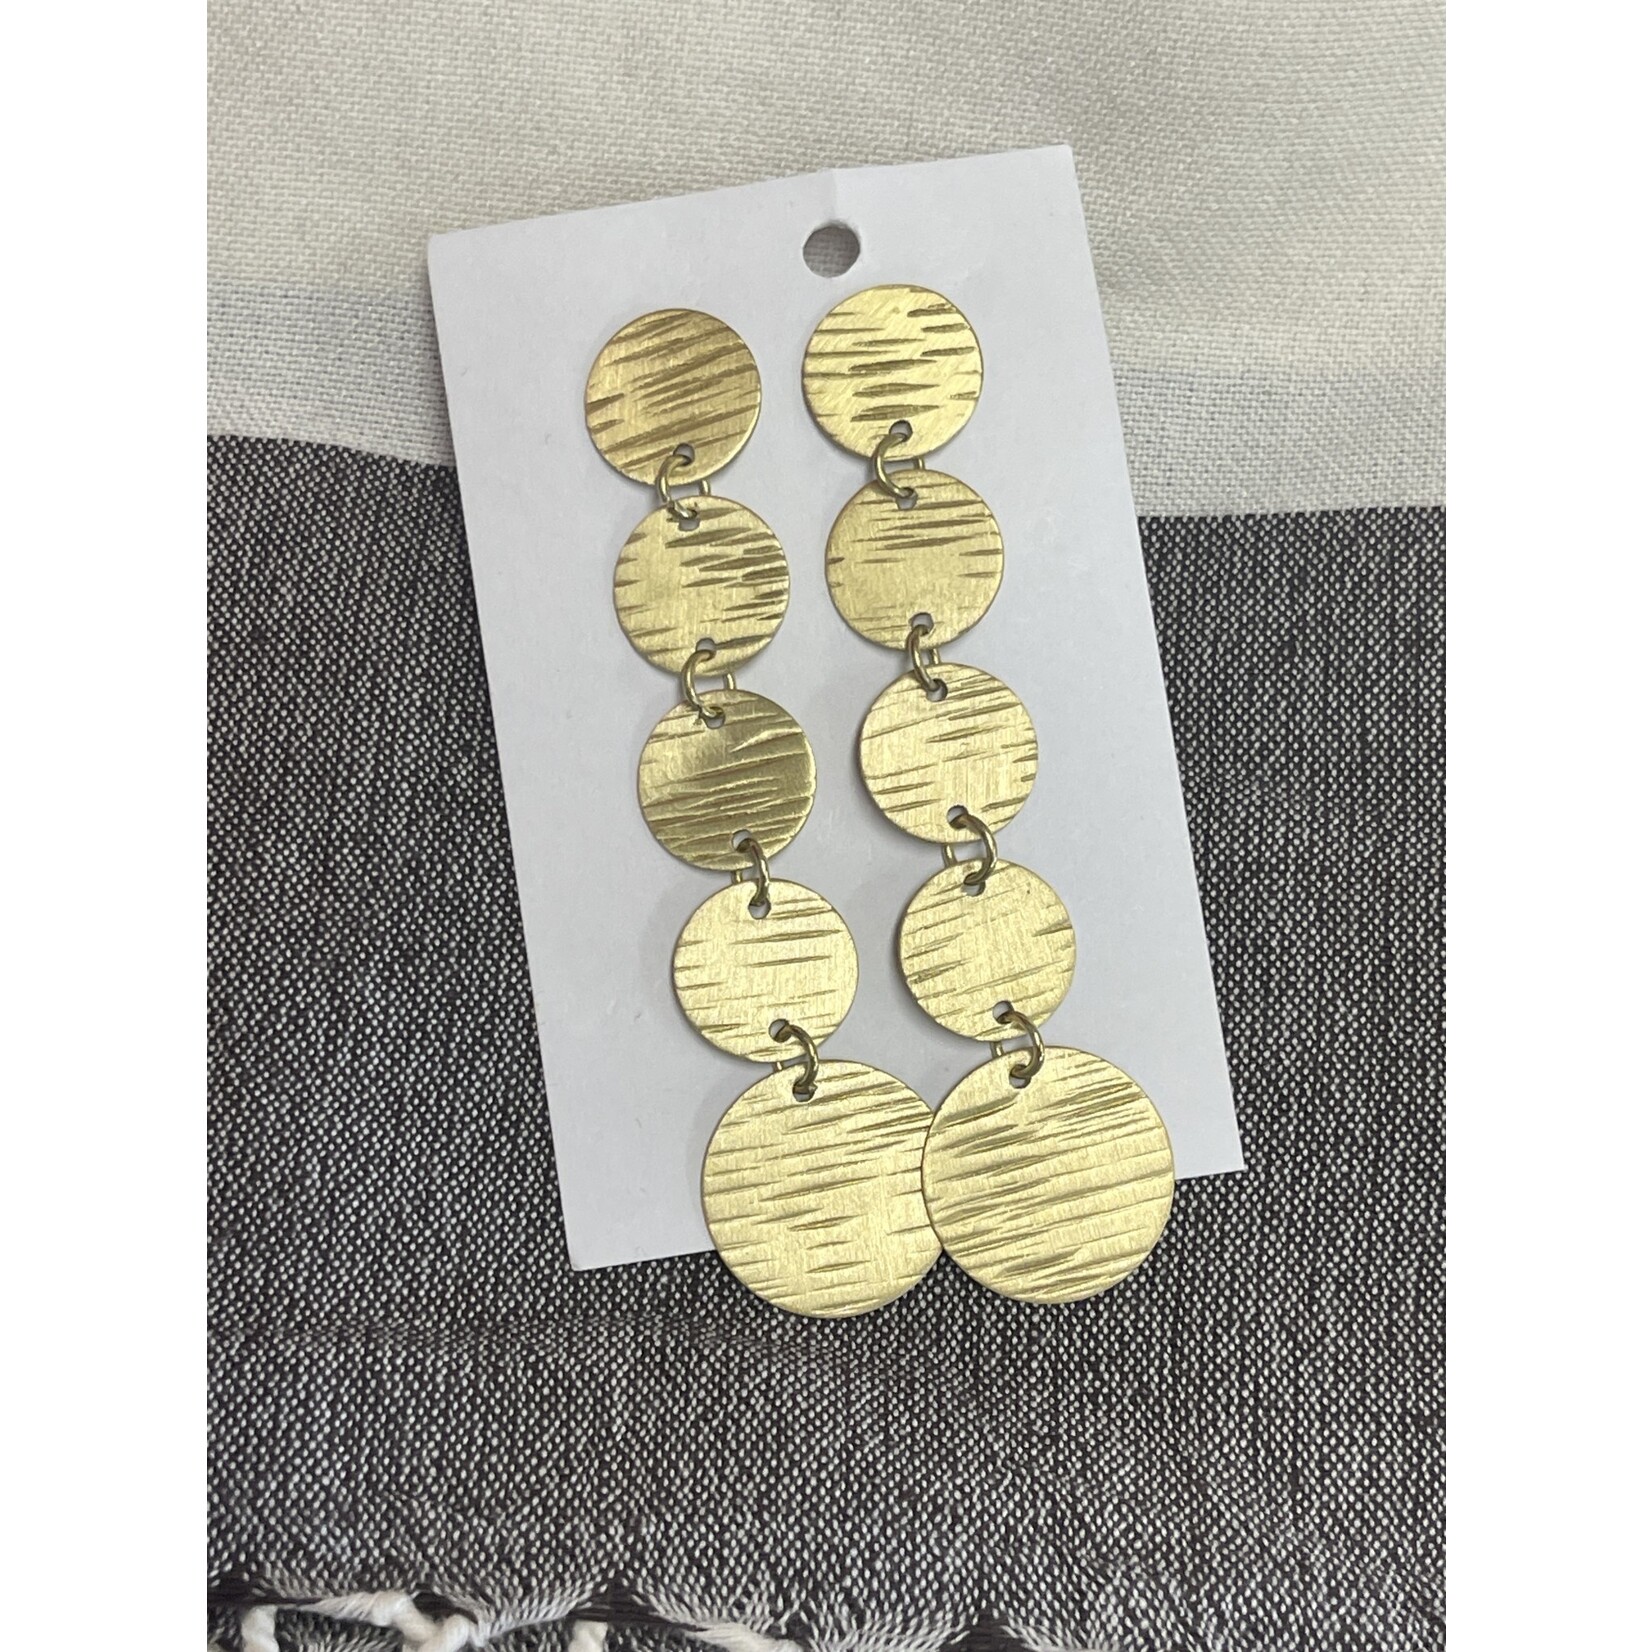 Summer Renee Jewelry HANDMADE Gold 5 Small Discs Dangling Earrings